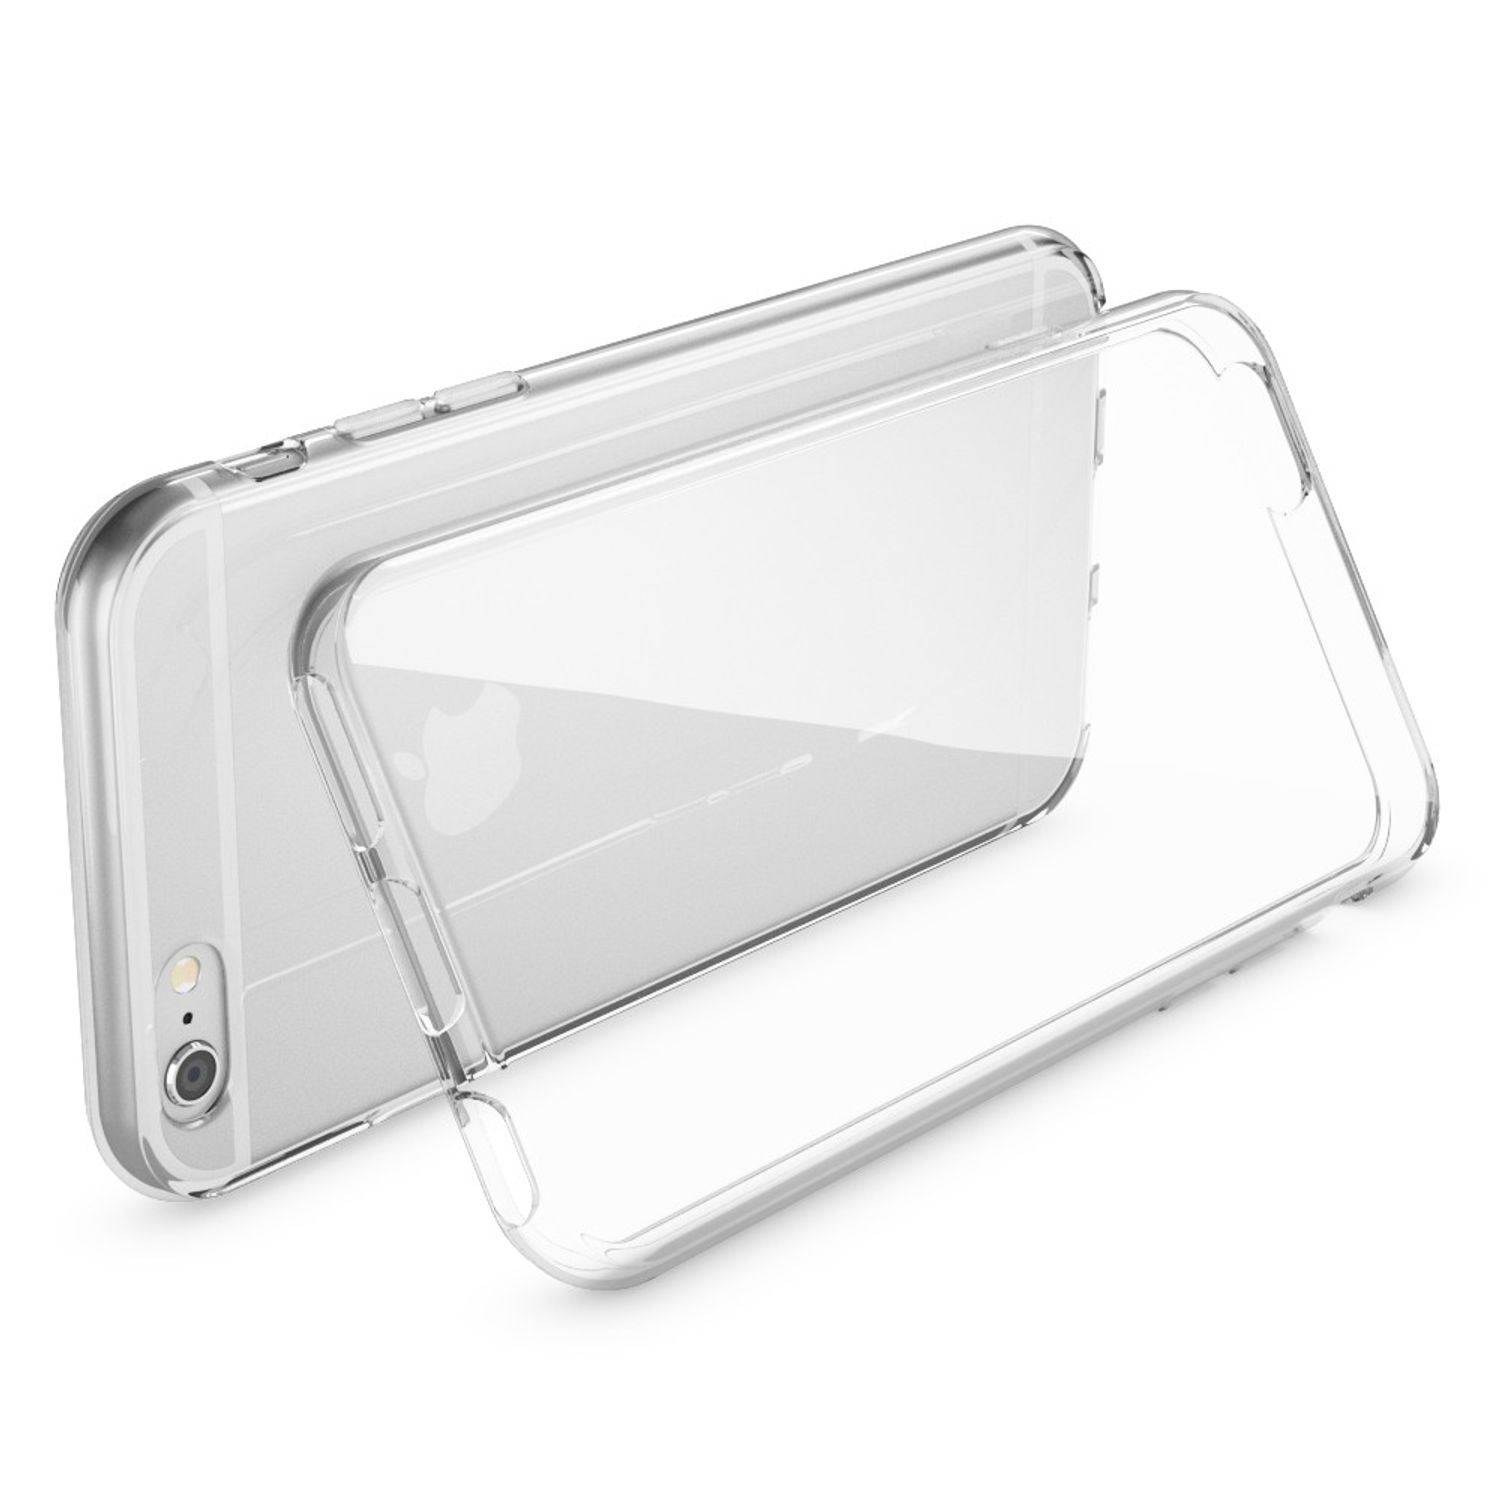 NALIA Klar Apple, Backcover, 6s, 6 Transparent iPhone Silikon Hülle, iPhone Transparente